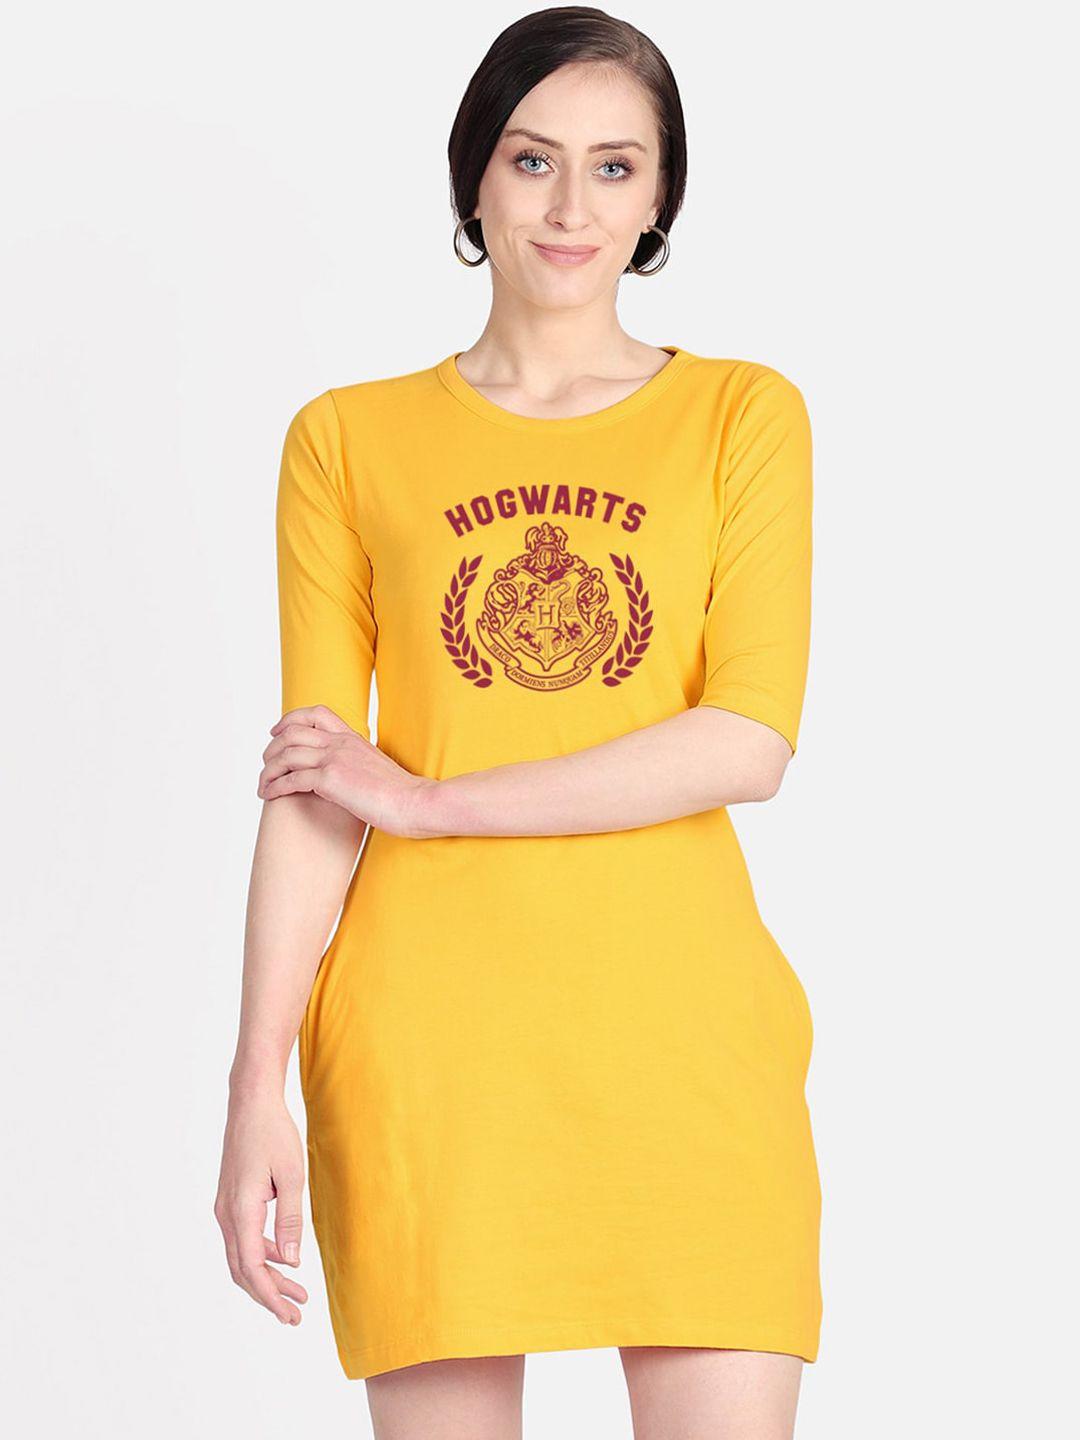 free authority mustard yellow cotton harry potter t-shirt dress